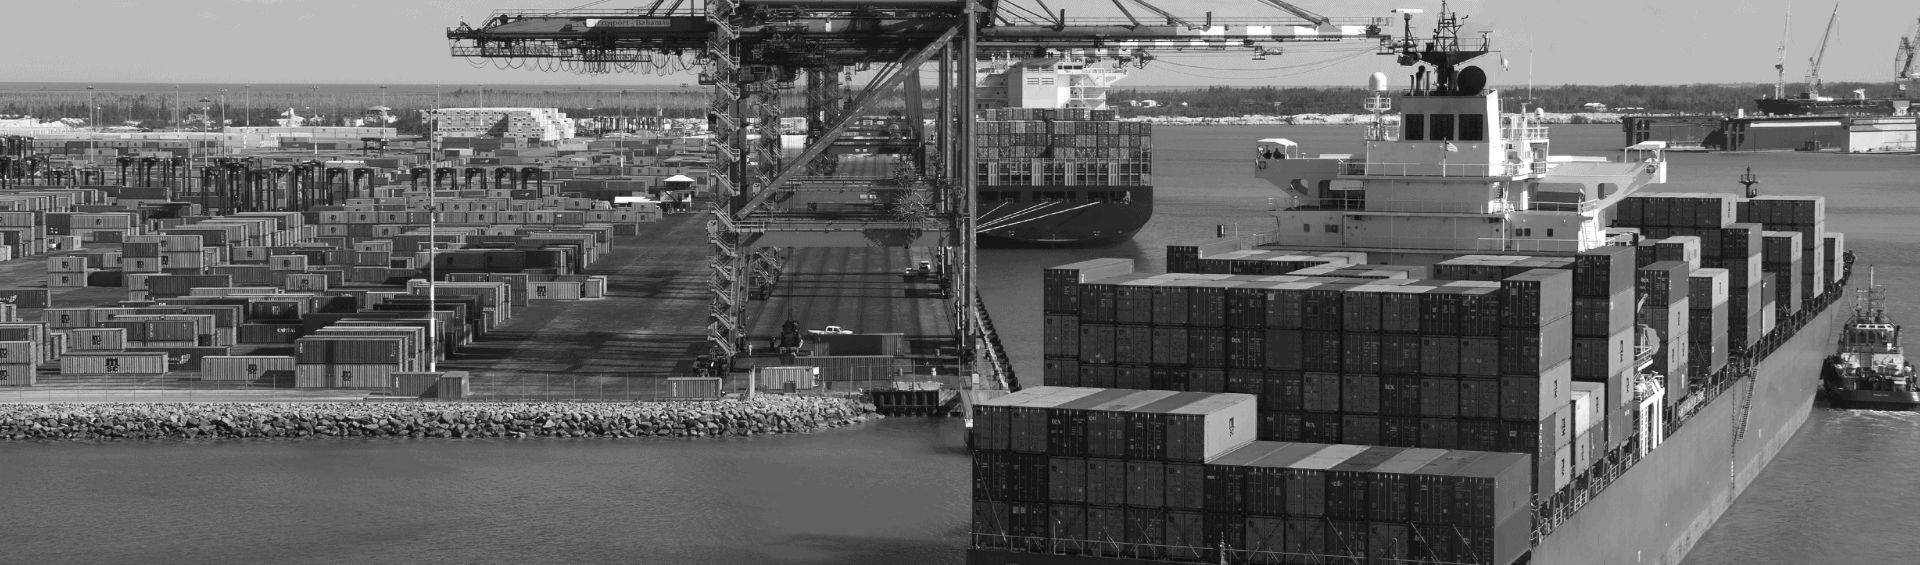 containerschip in haven